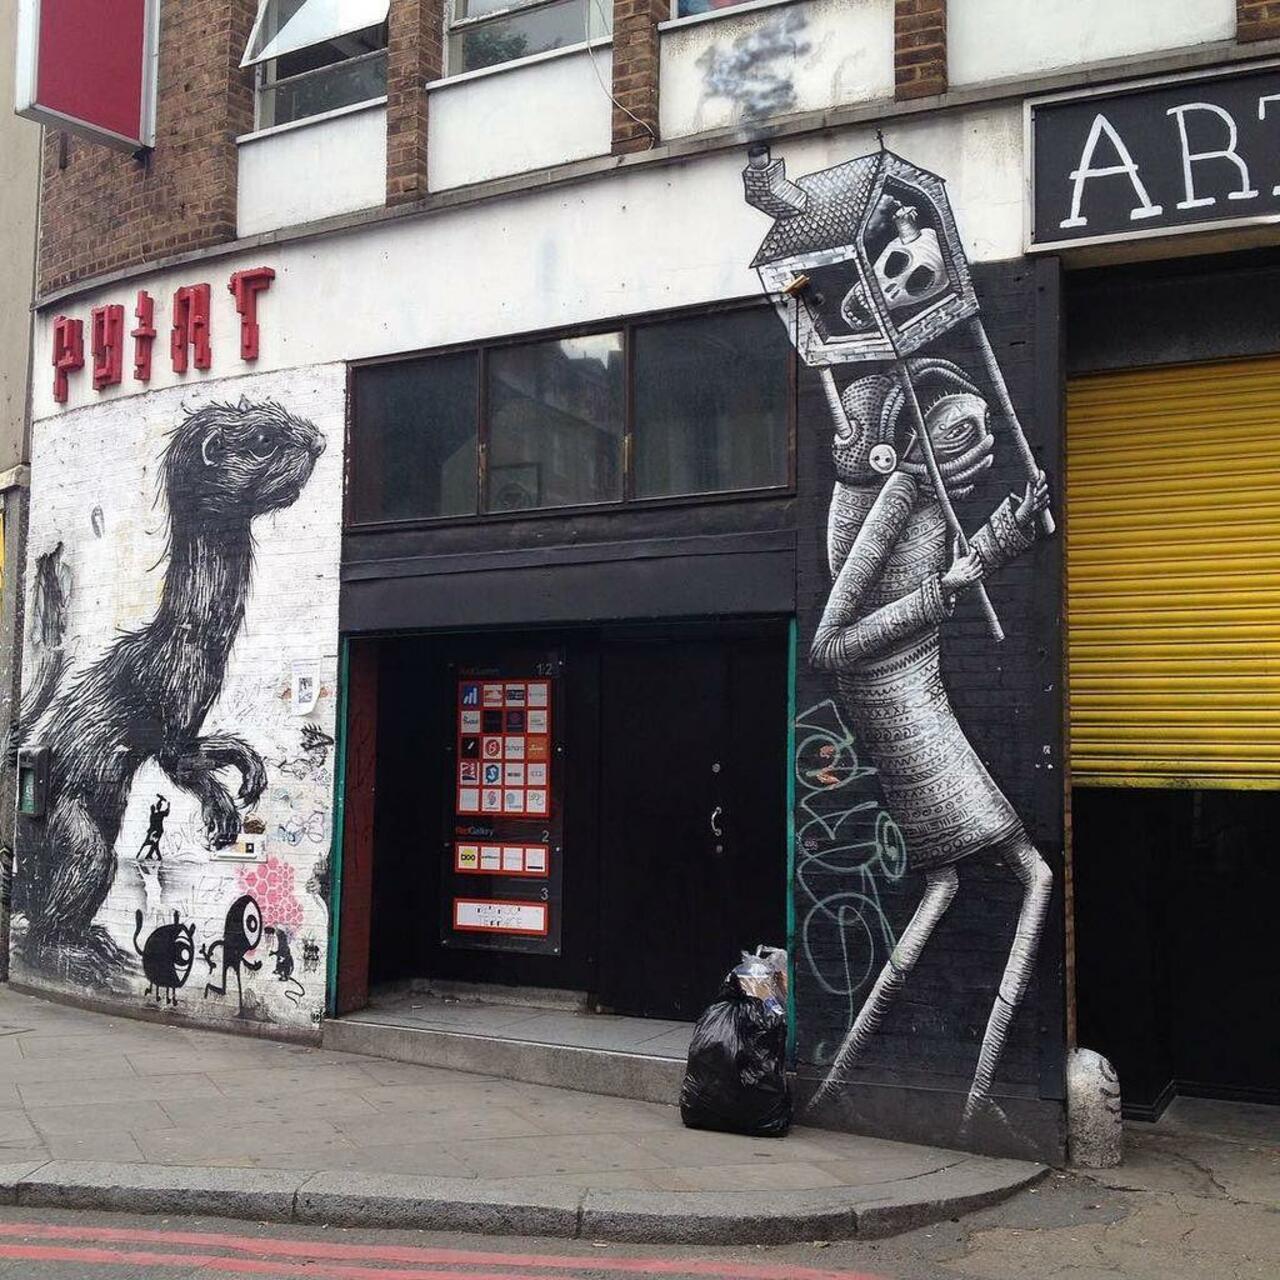 A few of my favorites #streetart #streetartlondon #graffiti #london #thisislondon  #ROA @phlegm_art @noriakinoriaki… http://t.co/Ovwel5VQxf